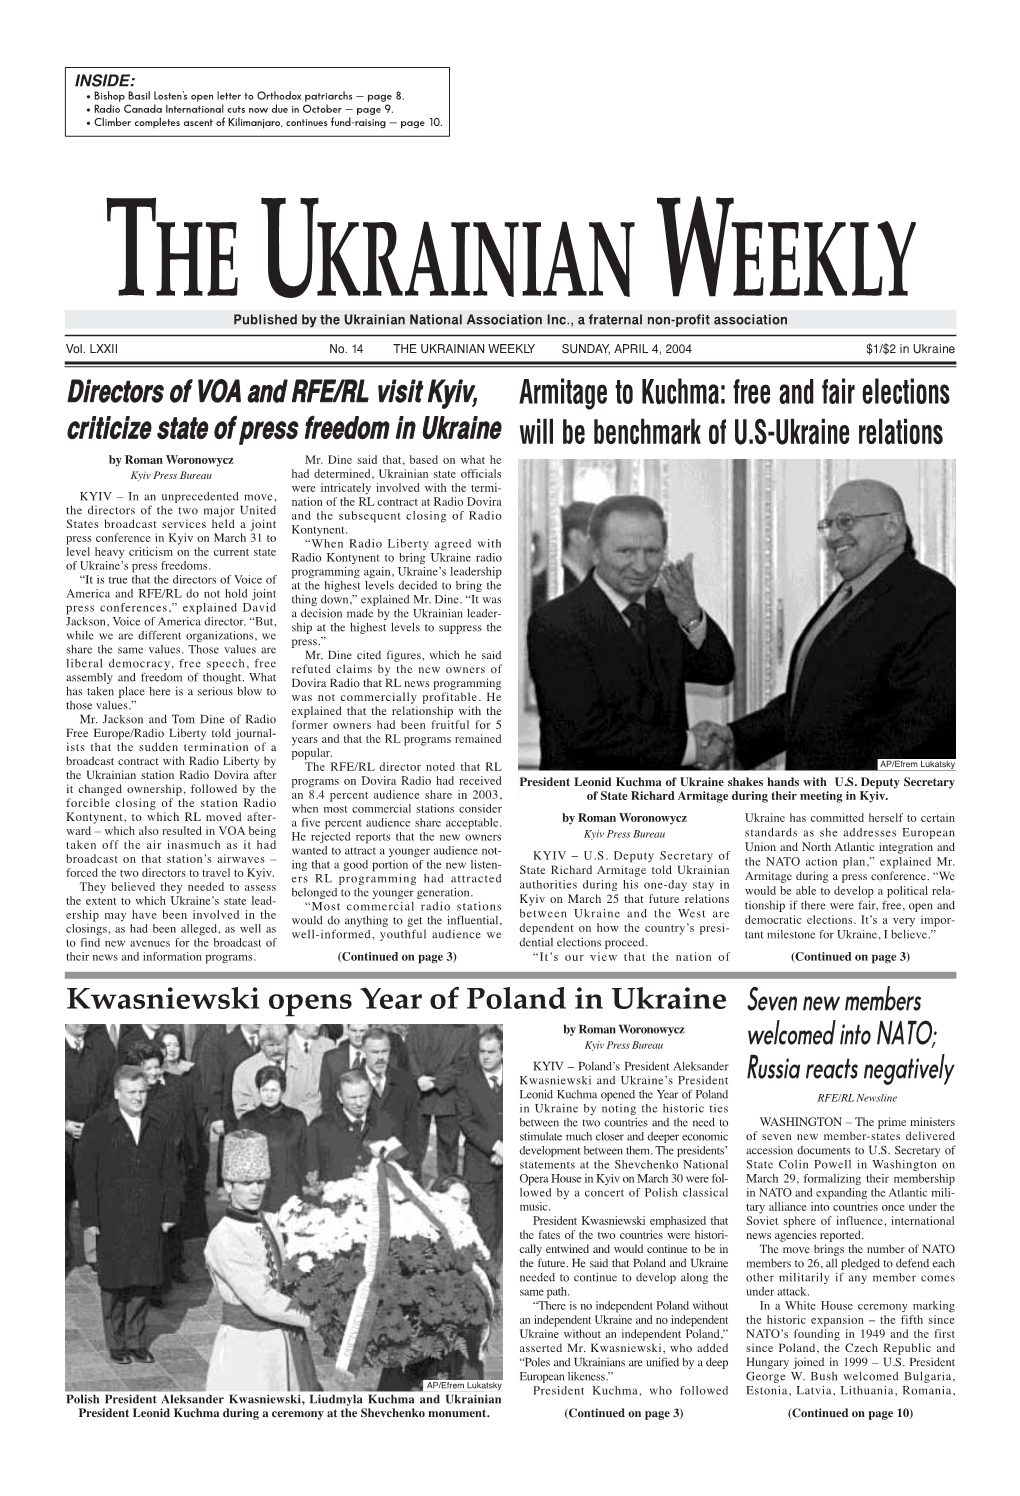 The Ukrainian Weekly 2004, No.14